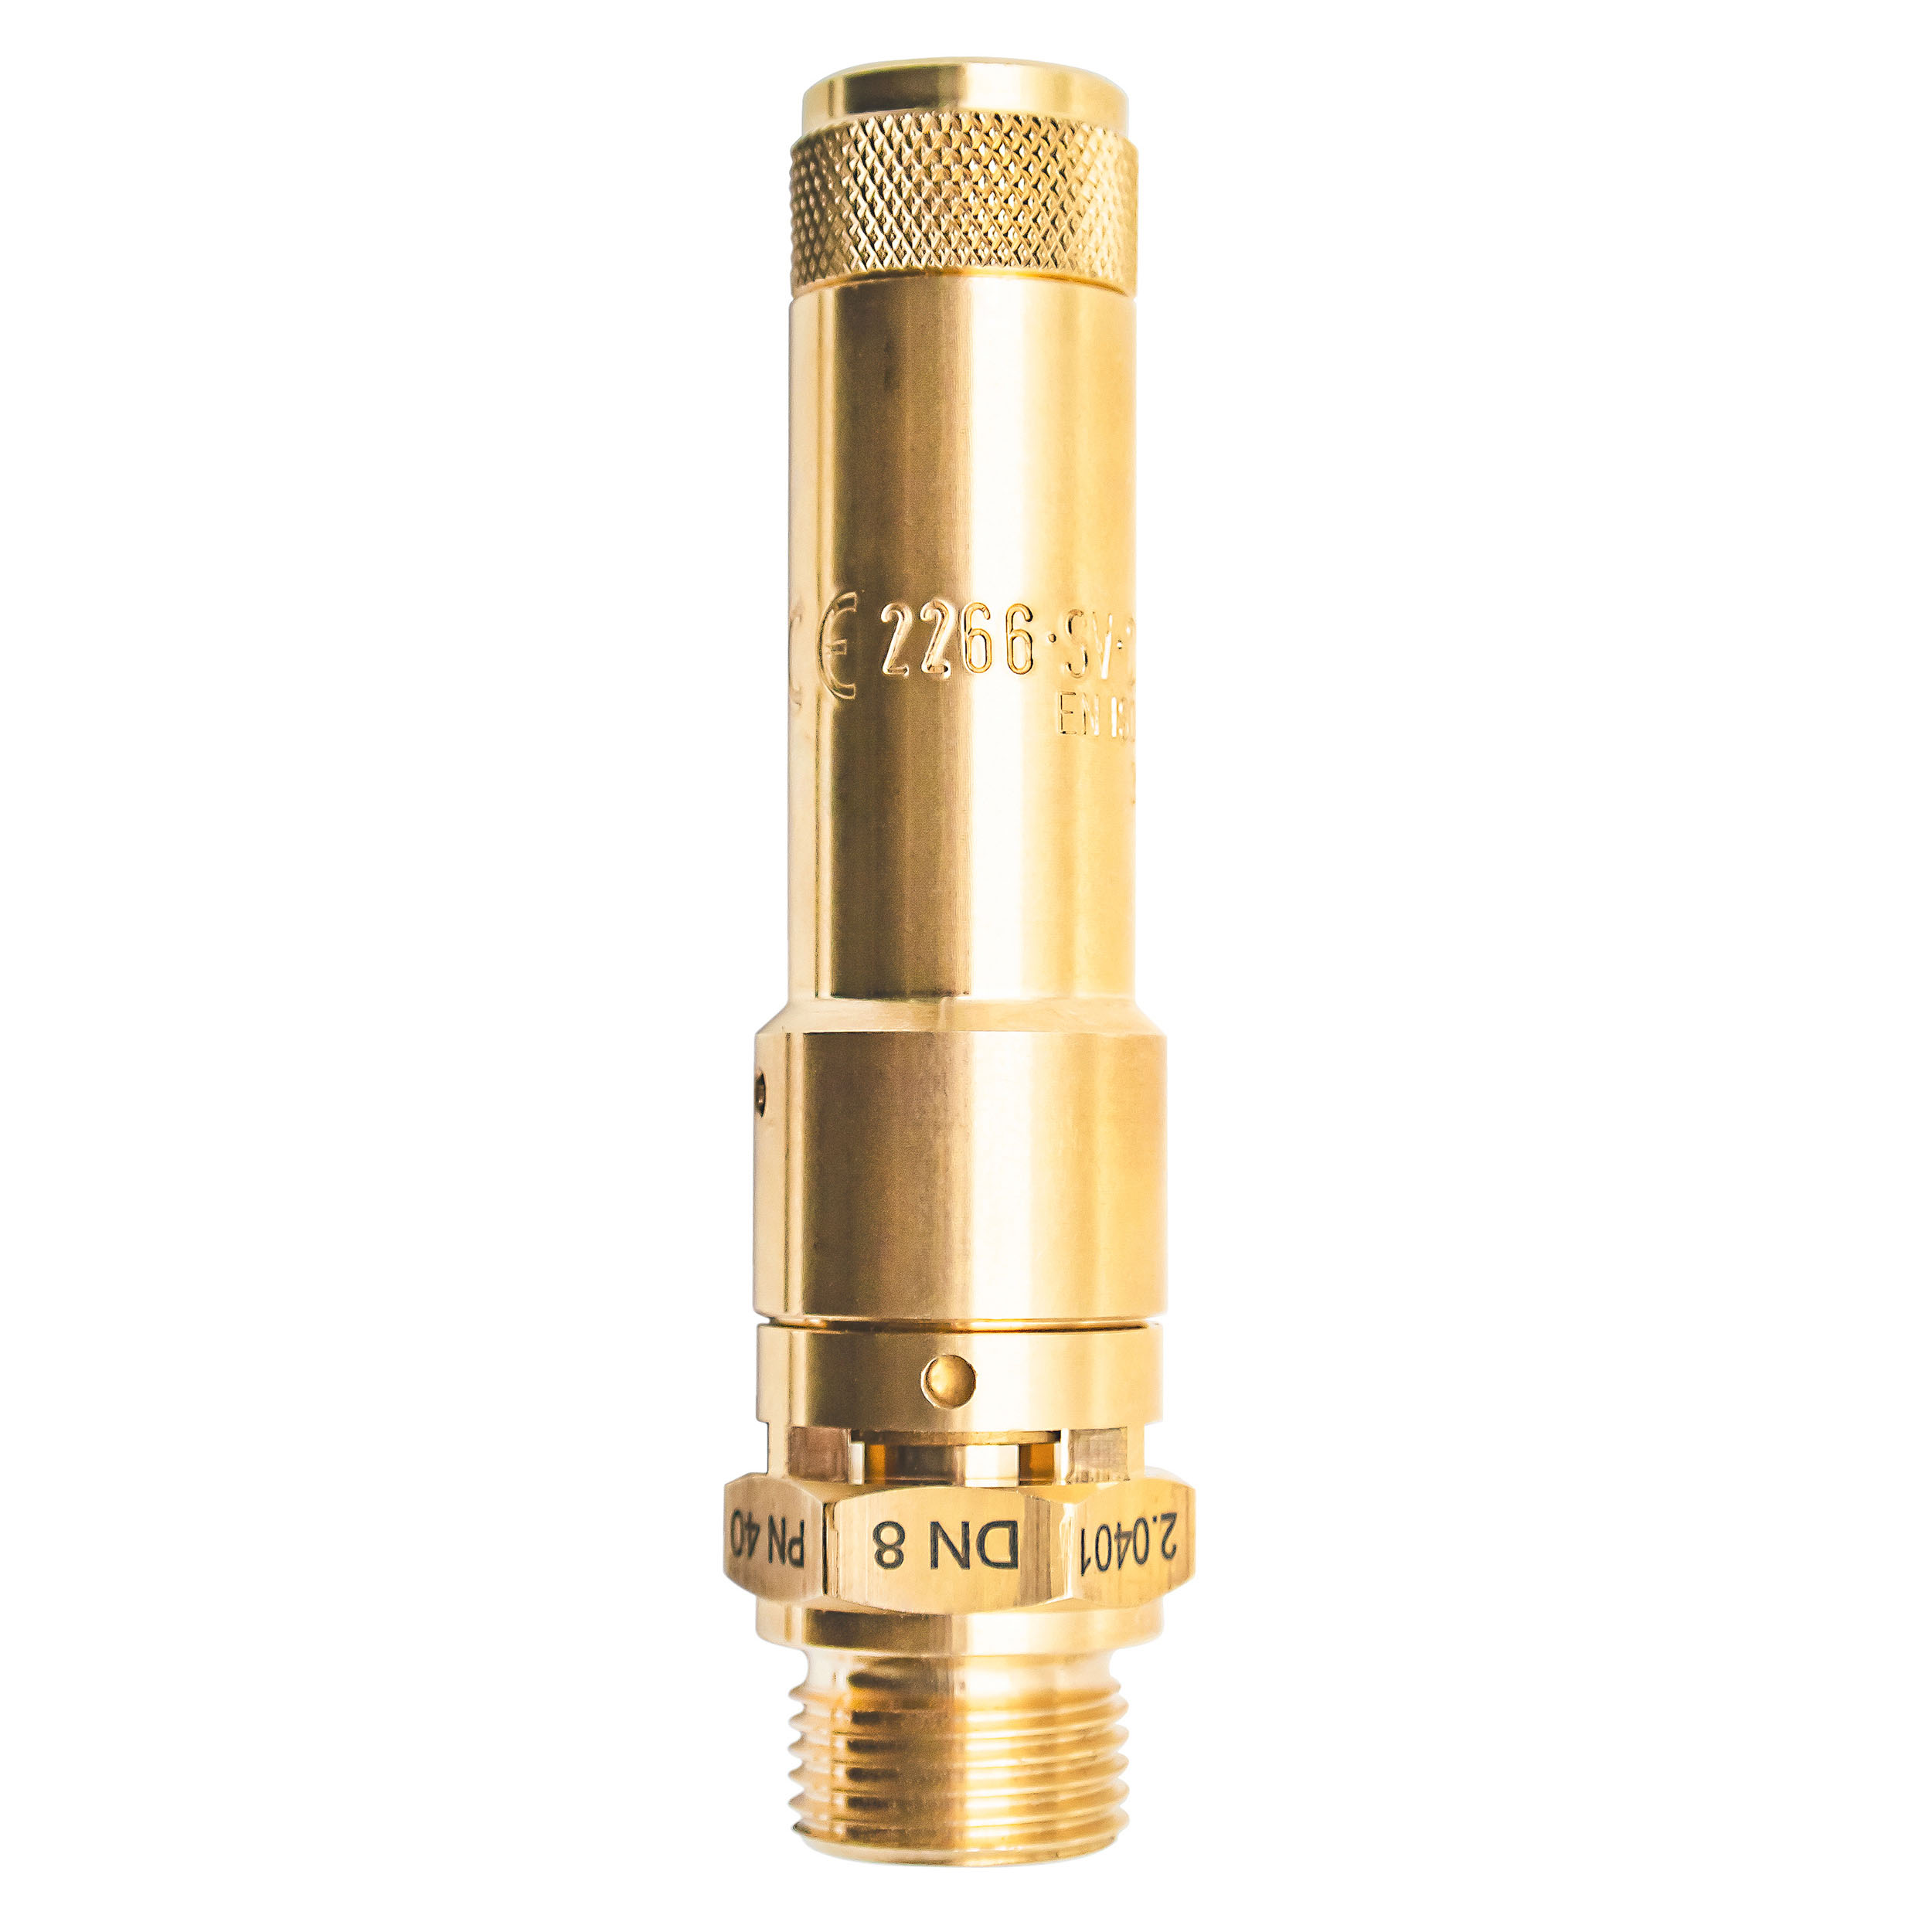 Component-tested safety valve DN 8, G¼, pressure: 1.6-2 bar